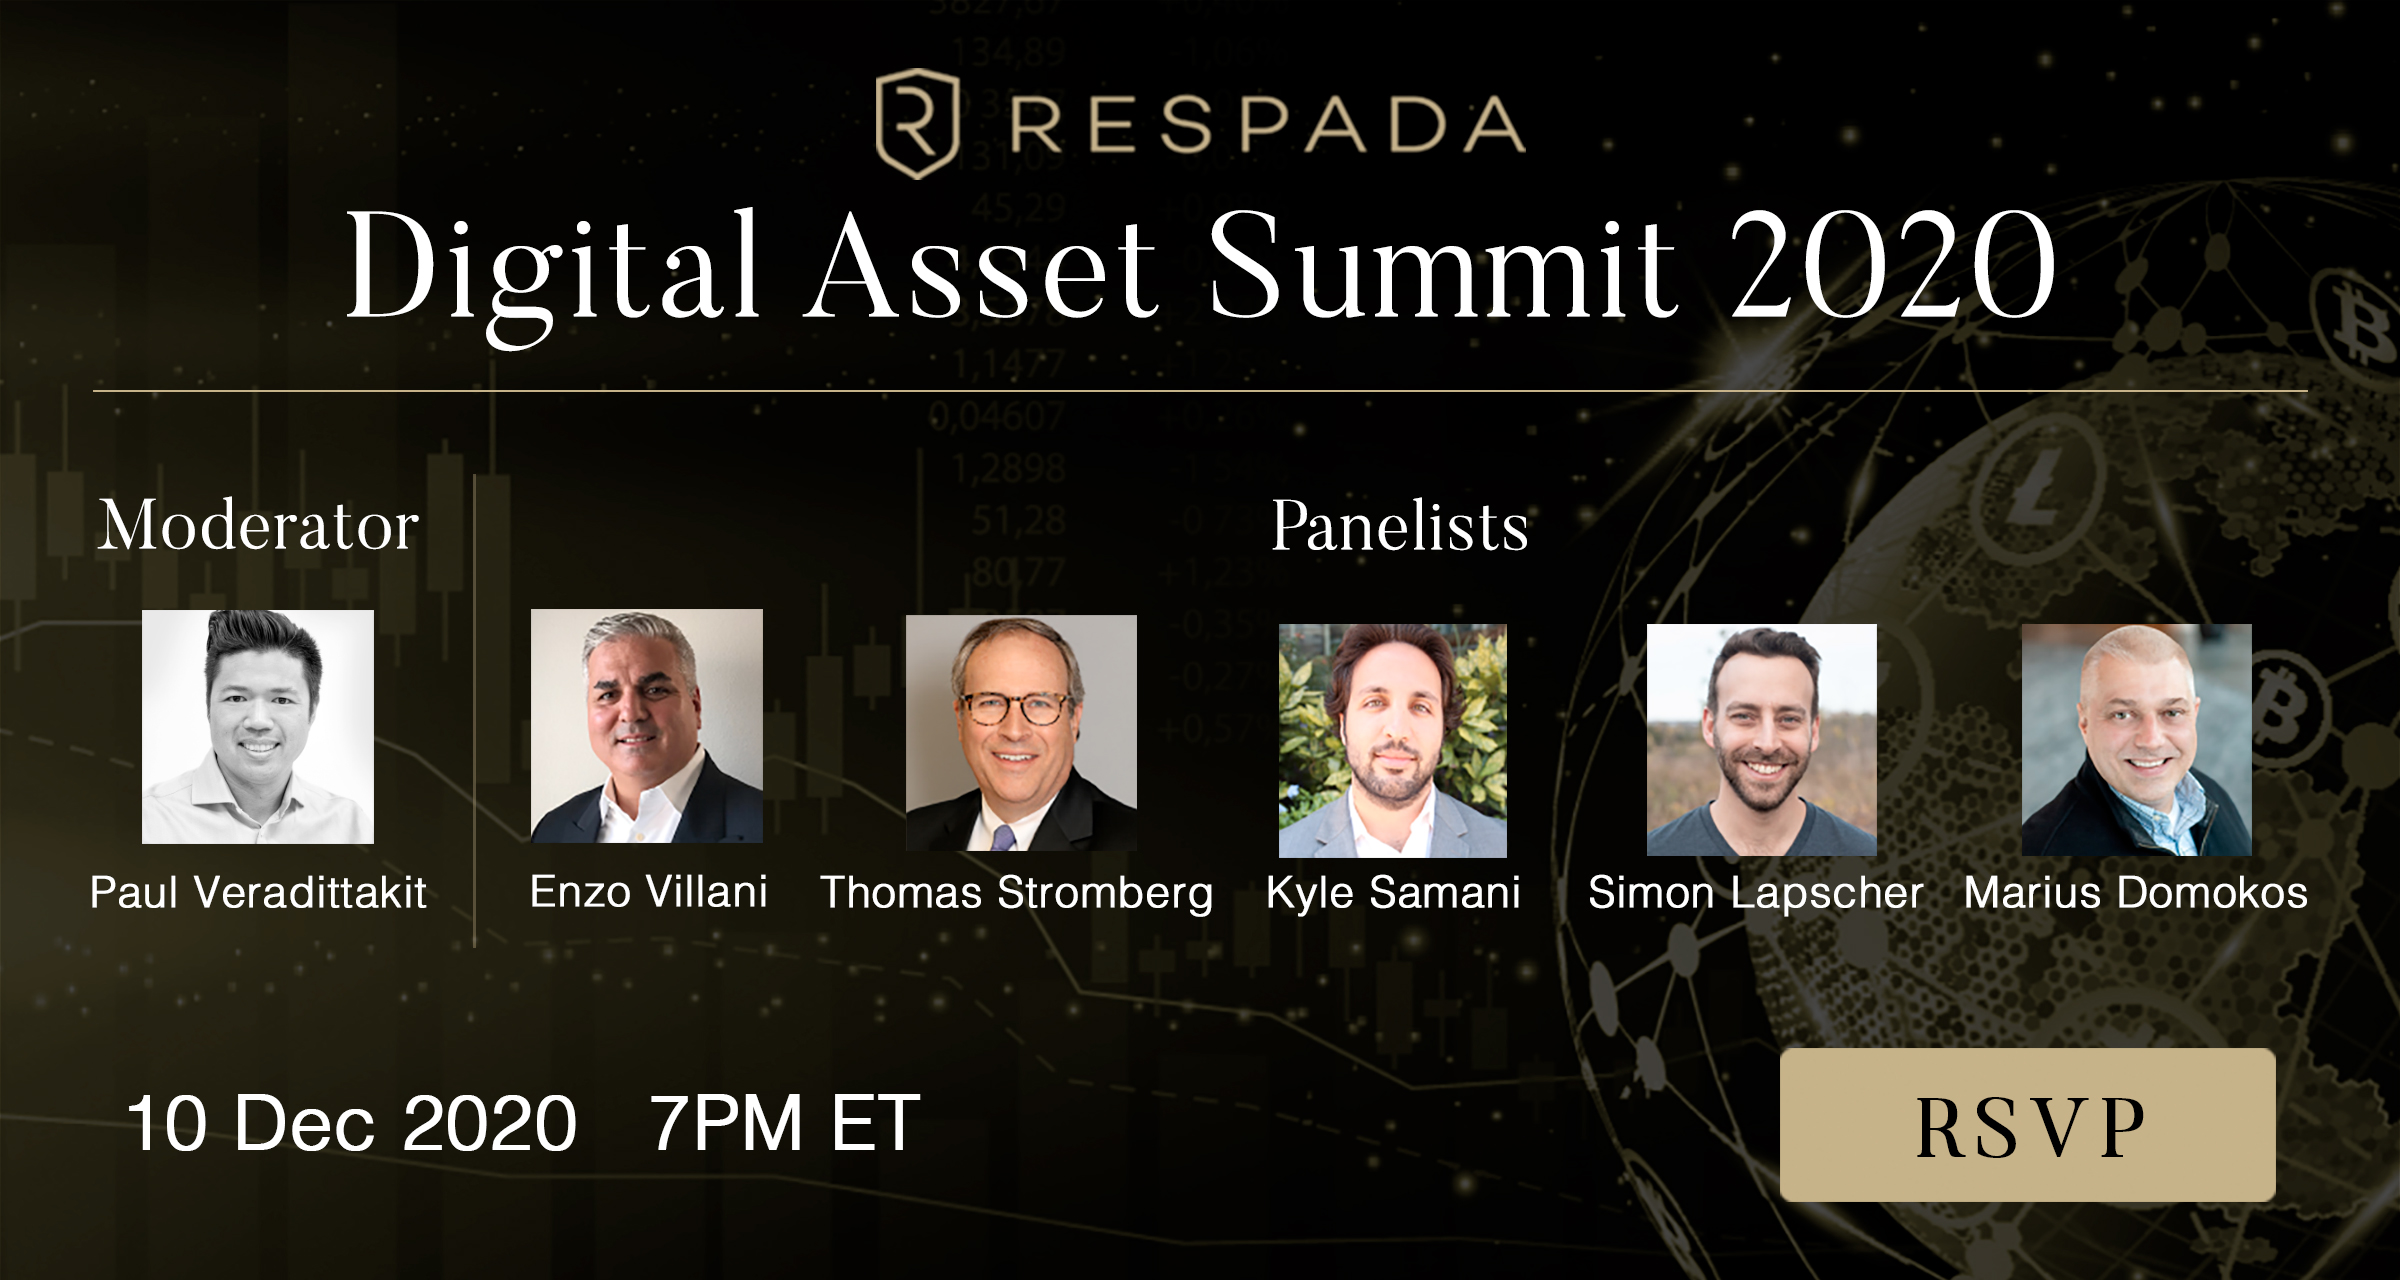 Digital Asset Summit 2020 Respada